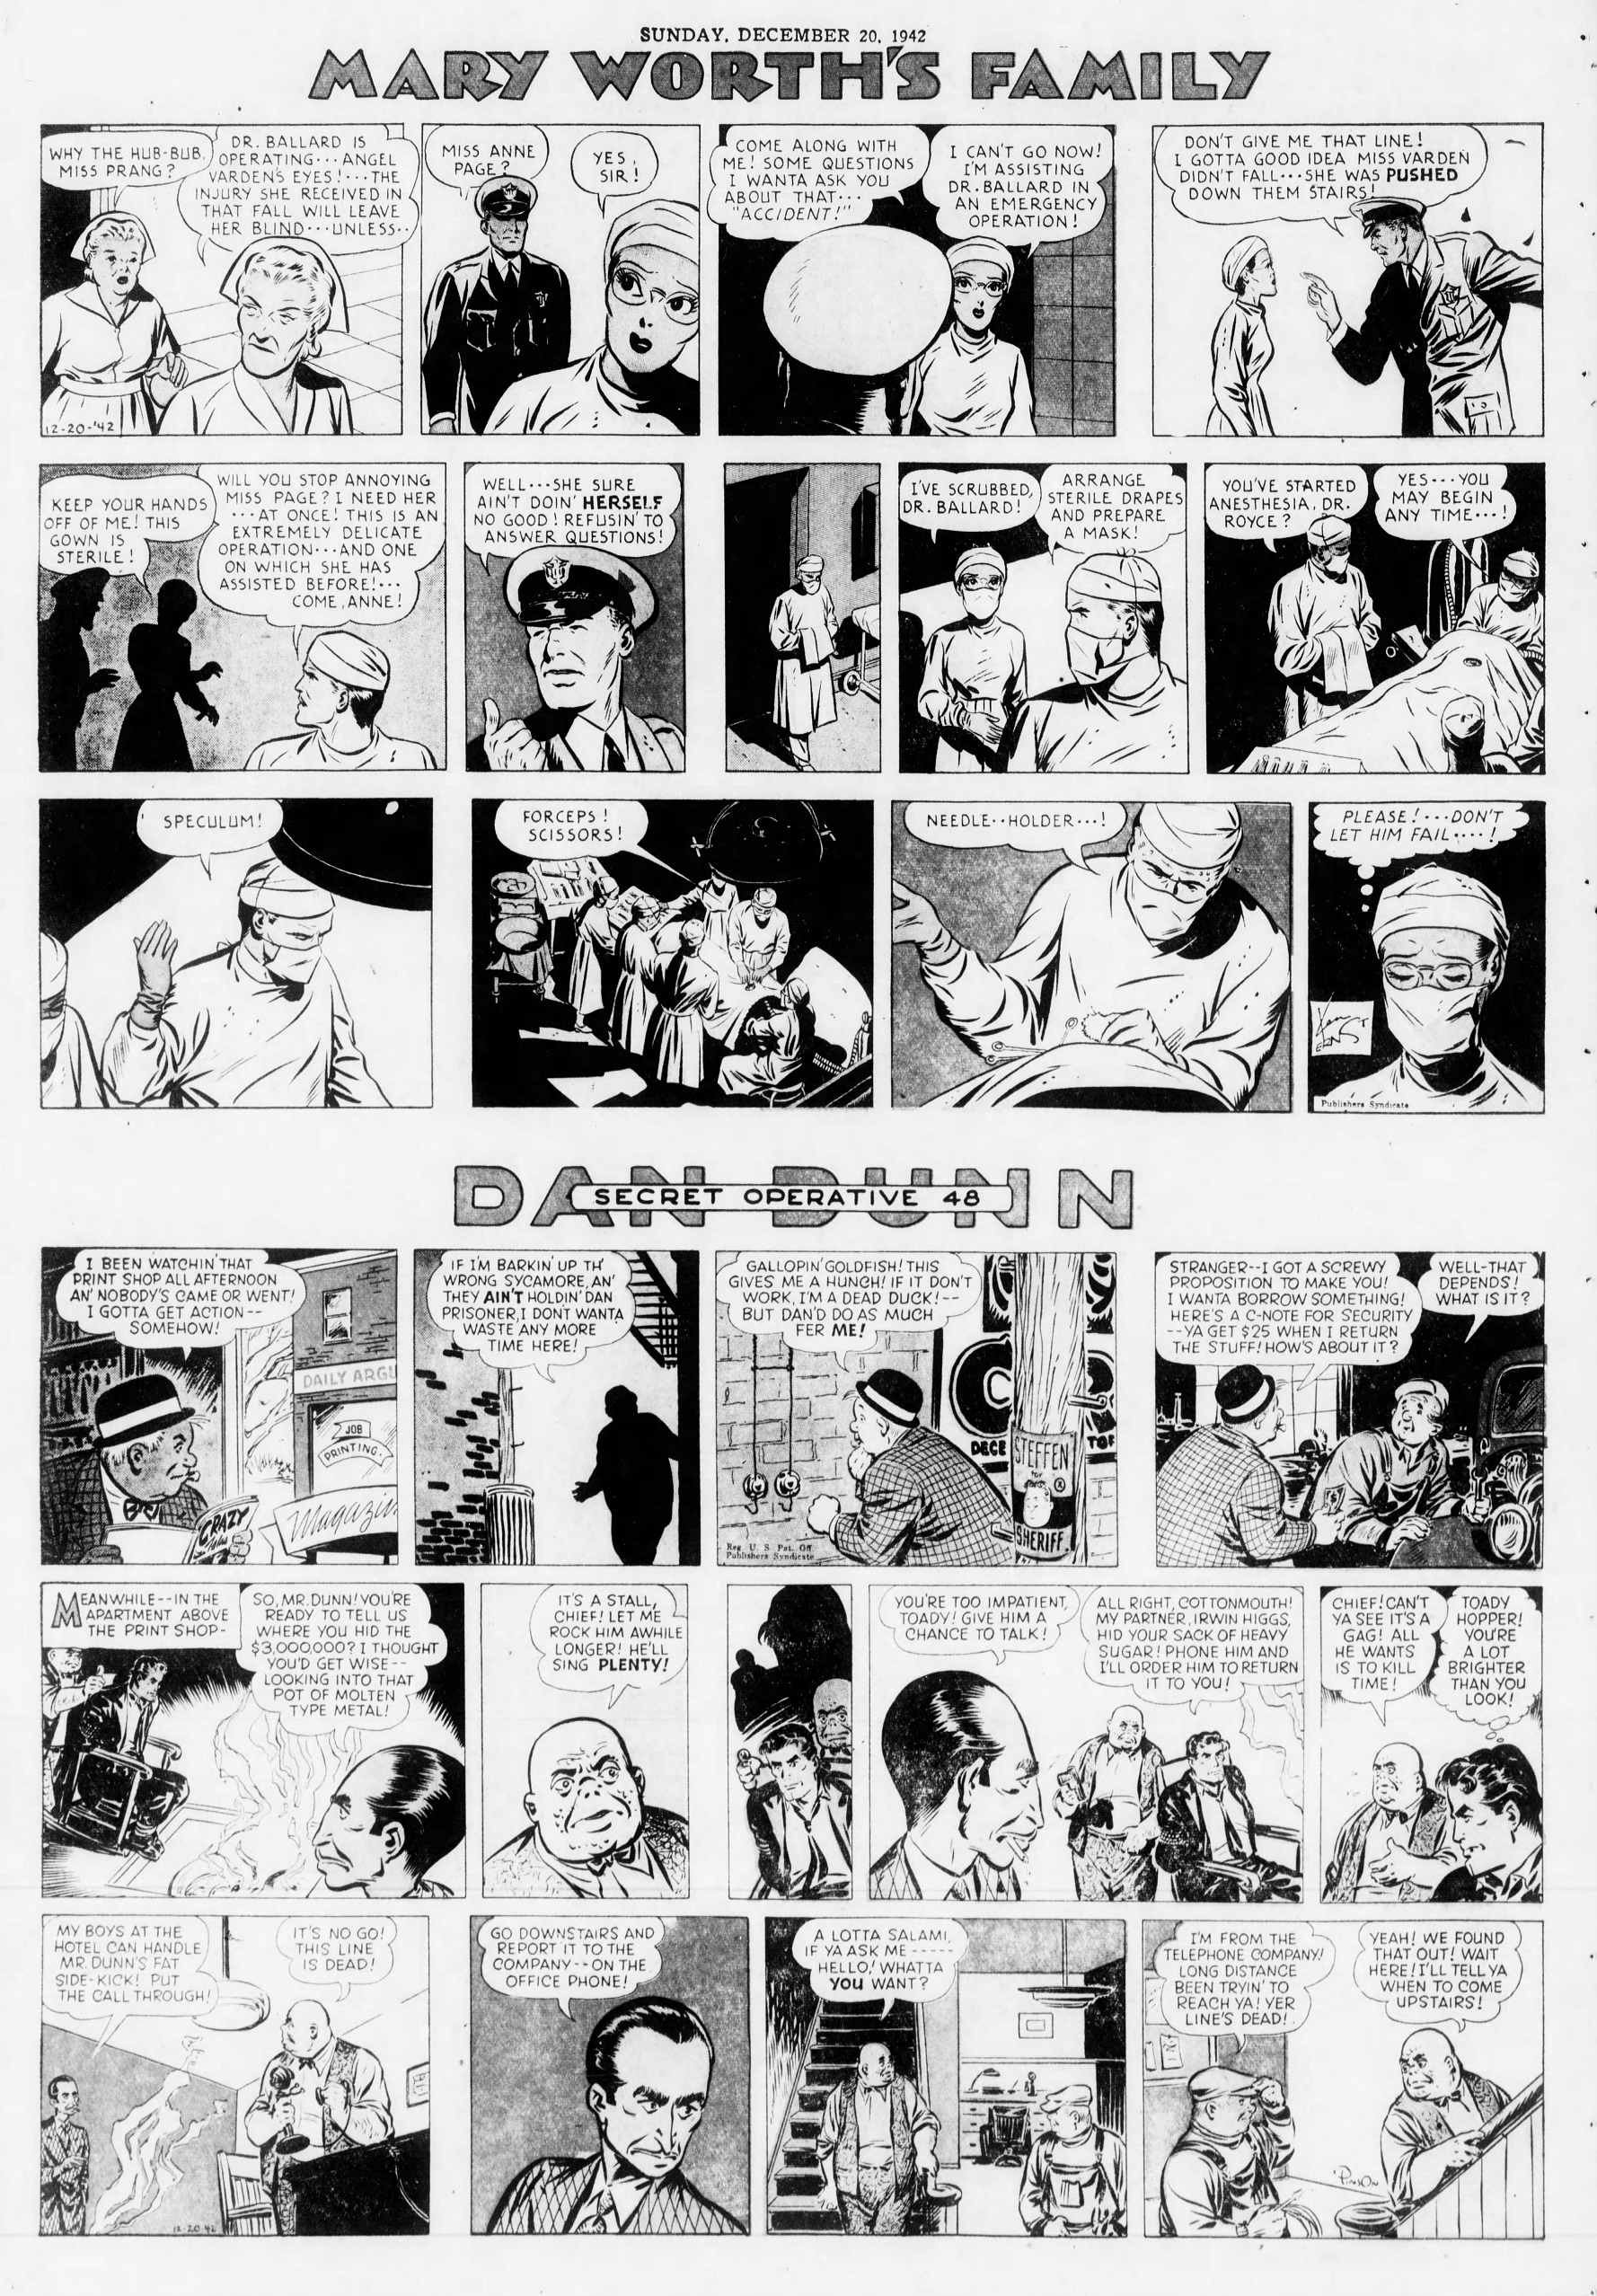 The_Brooklyn_Daily_Eagle_Sun__Dec_20__1942_(9)-2.jpg